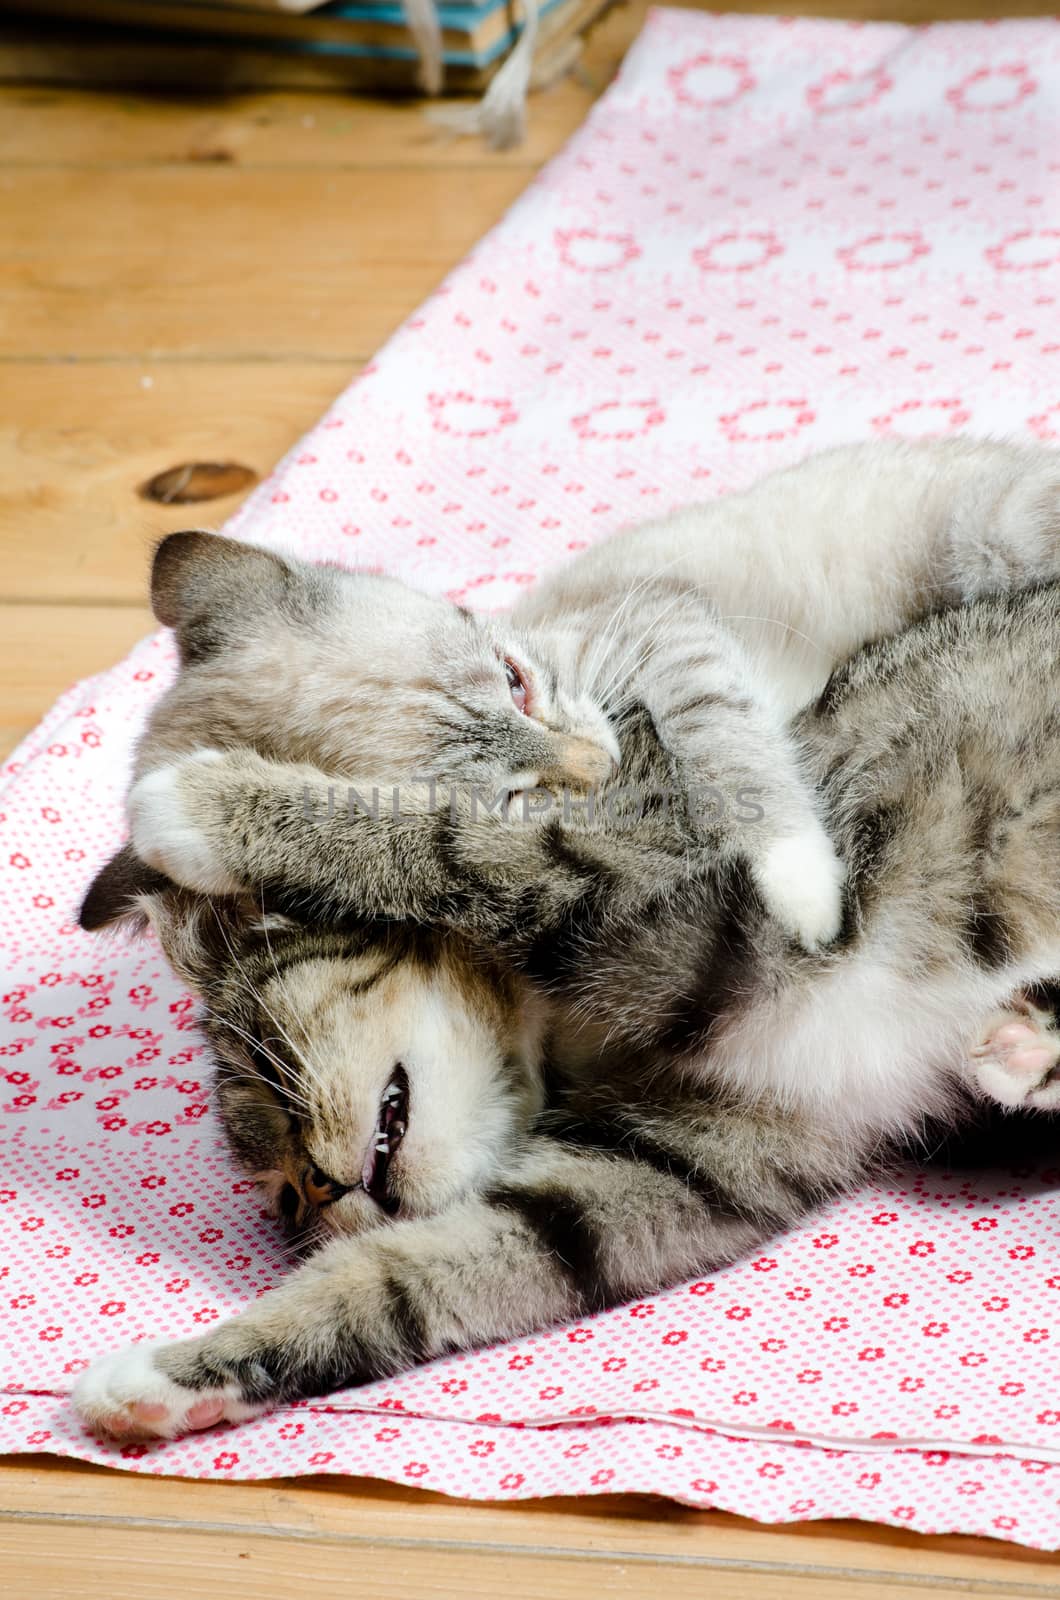 kittens fighting